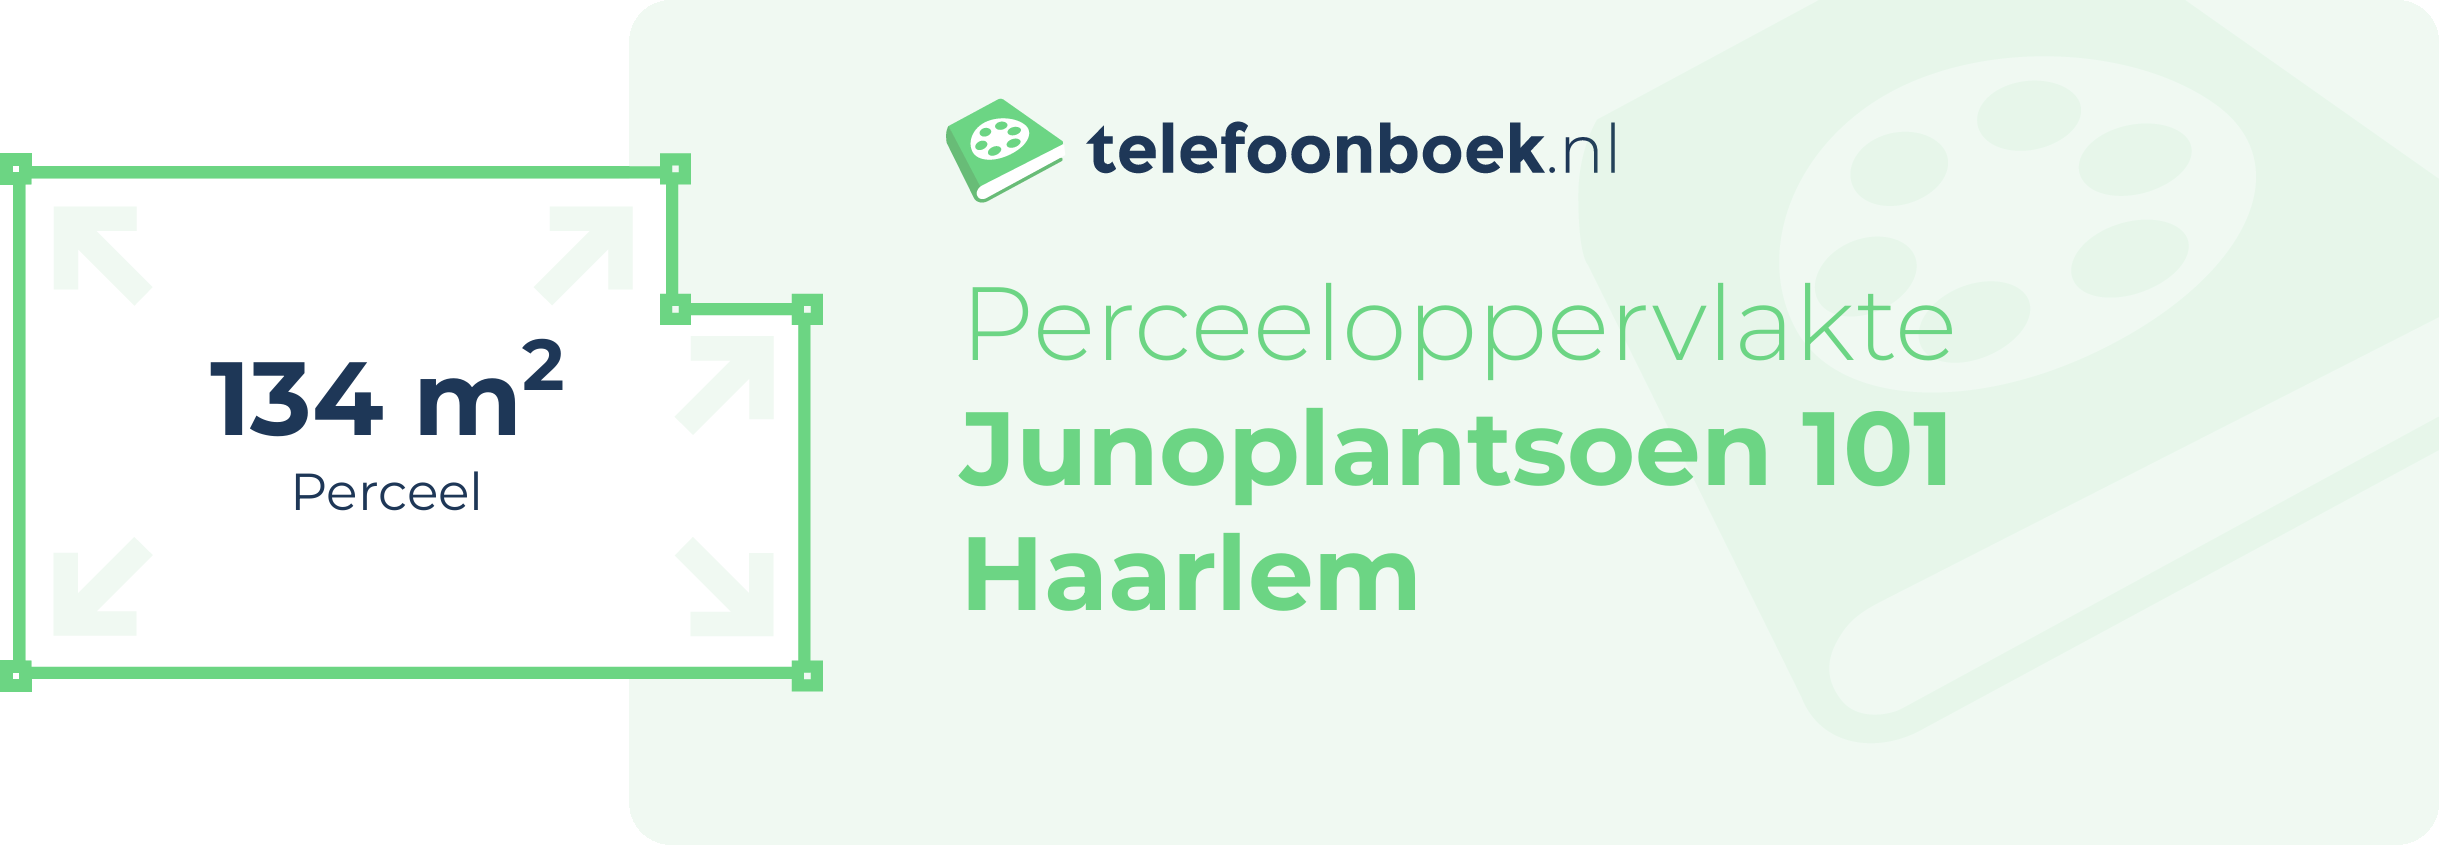 Perceeloppervlakte Junoplantsoen 101 Haarlem